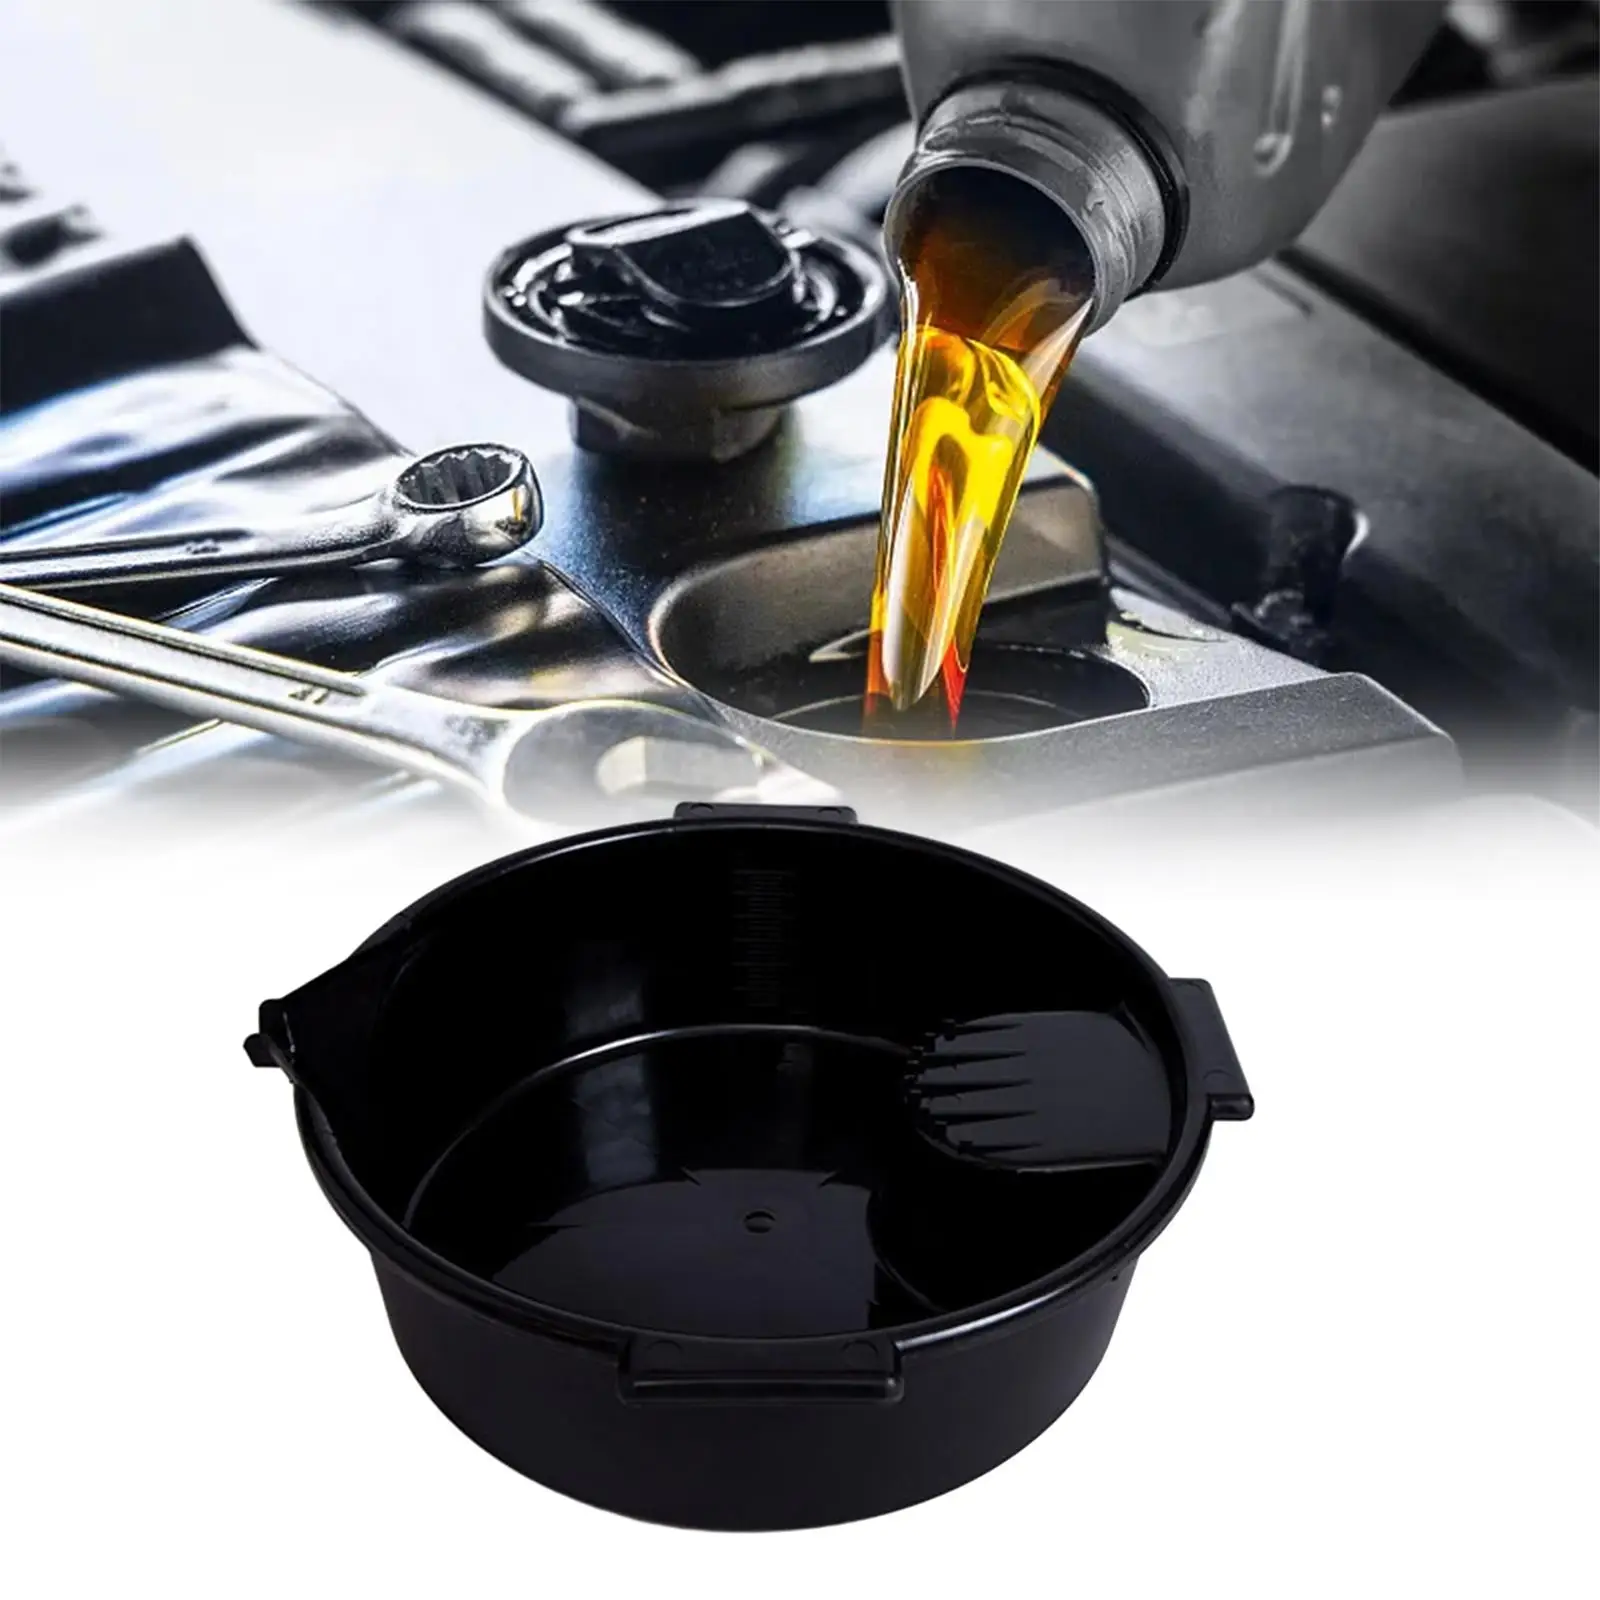 Oil Drain Pan Leak Proof Auto Repair Basin for Workshop Motorcycle Cars